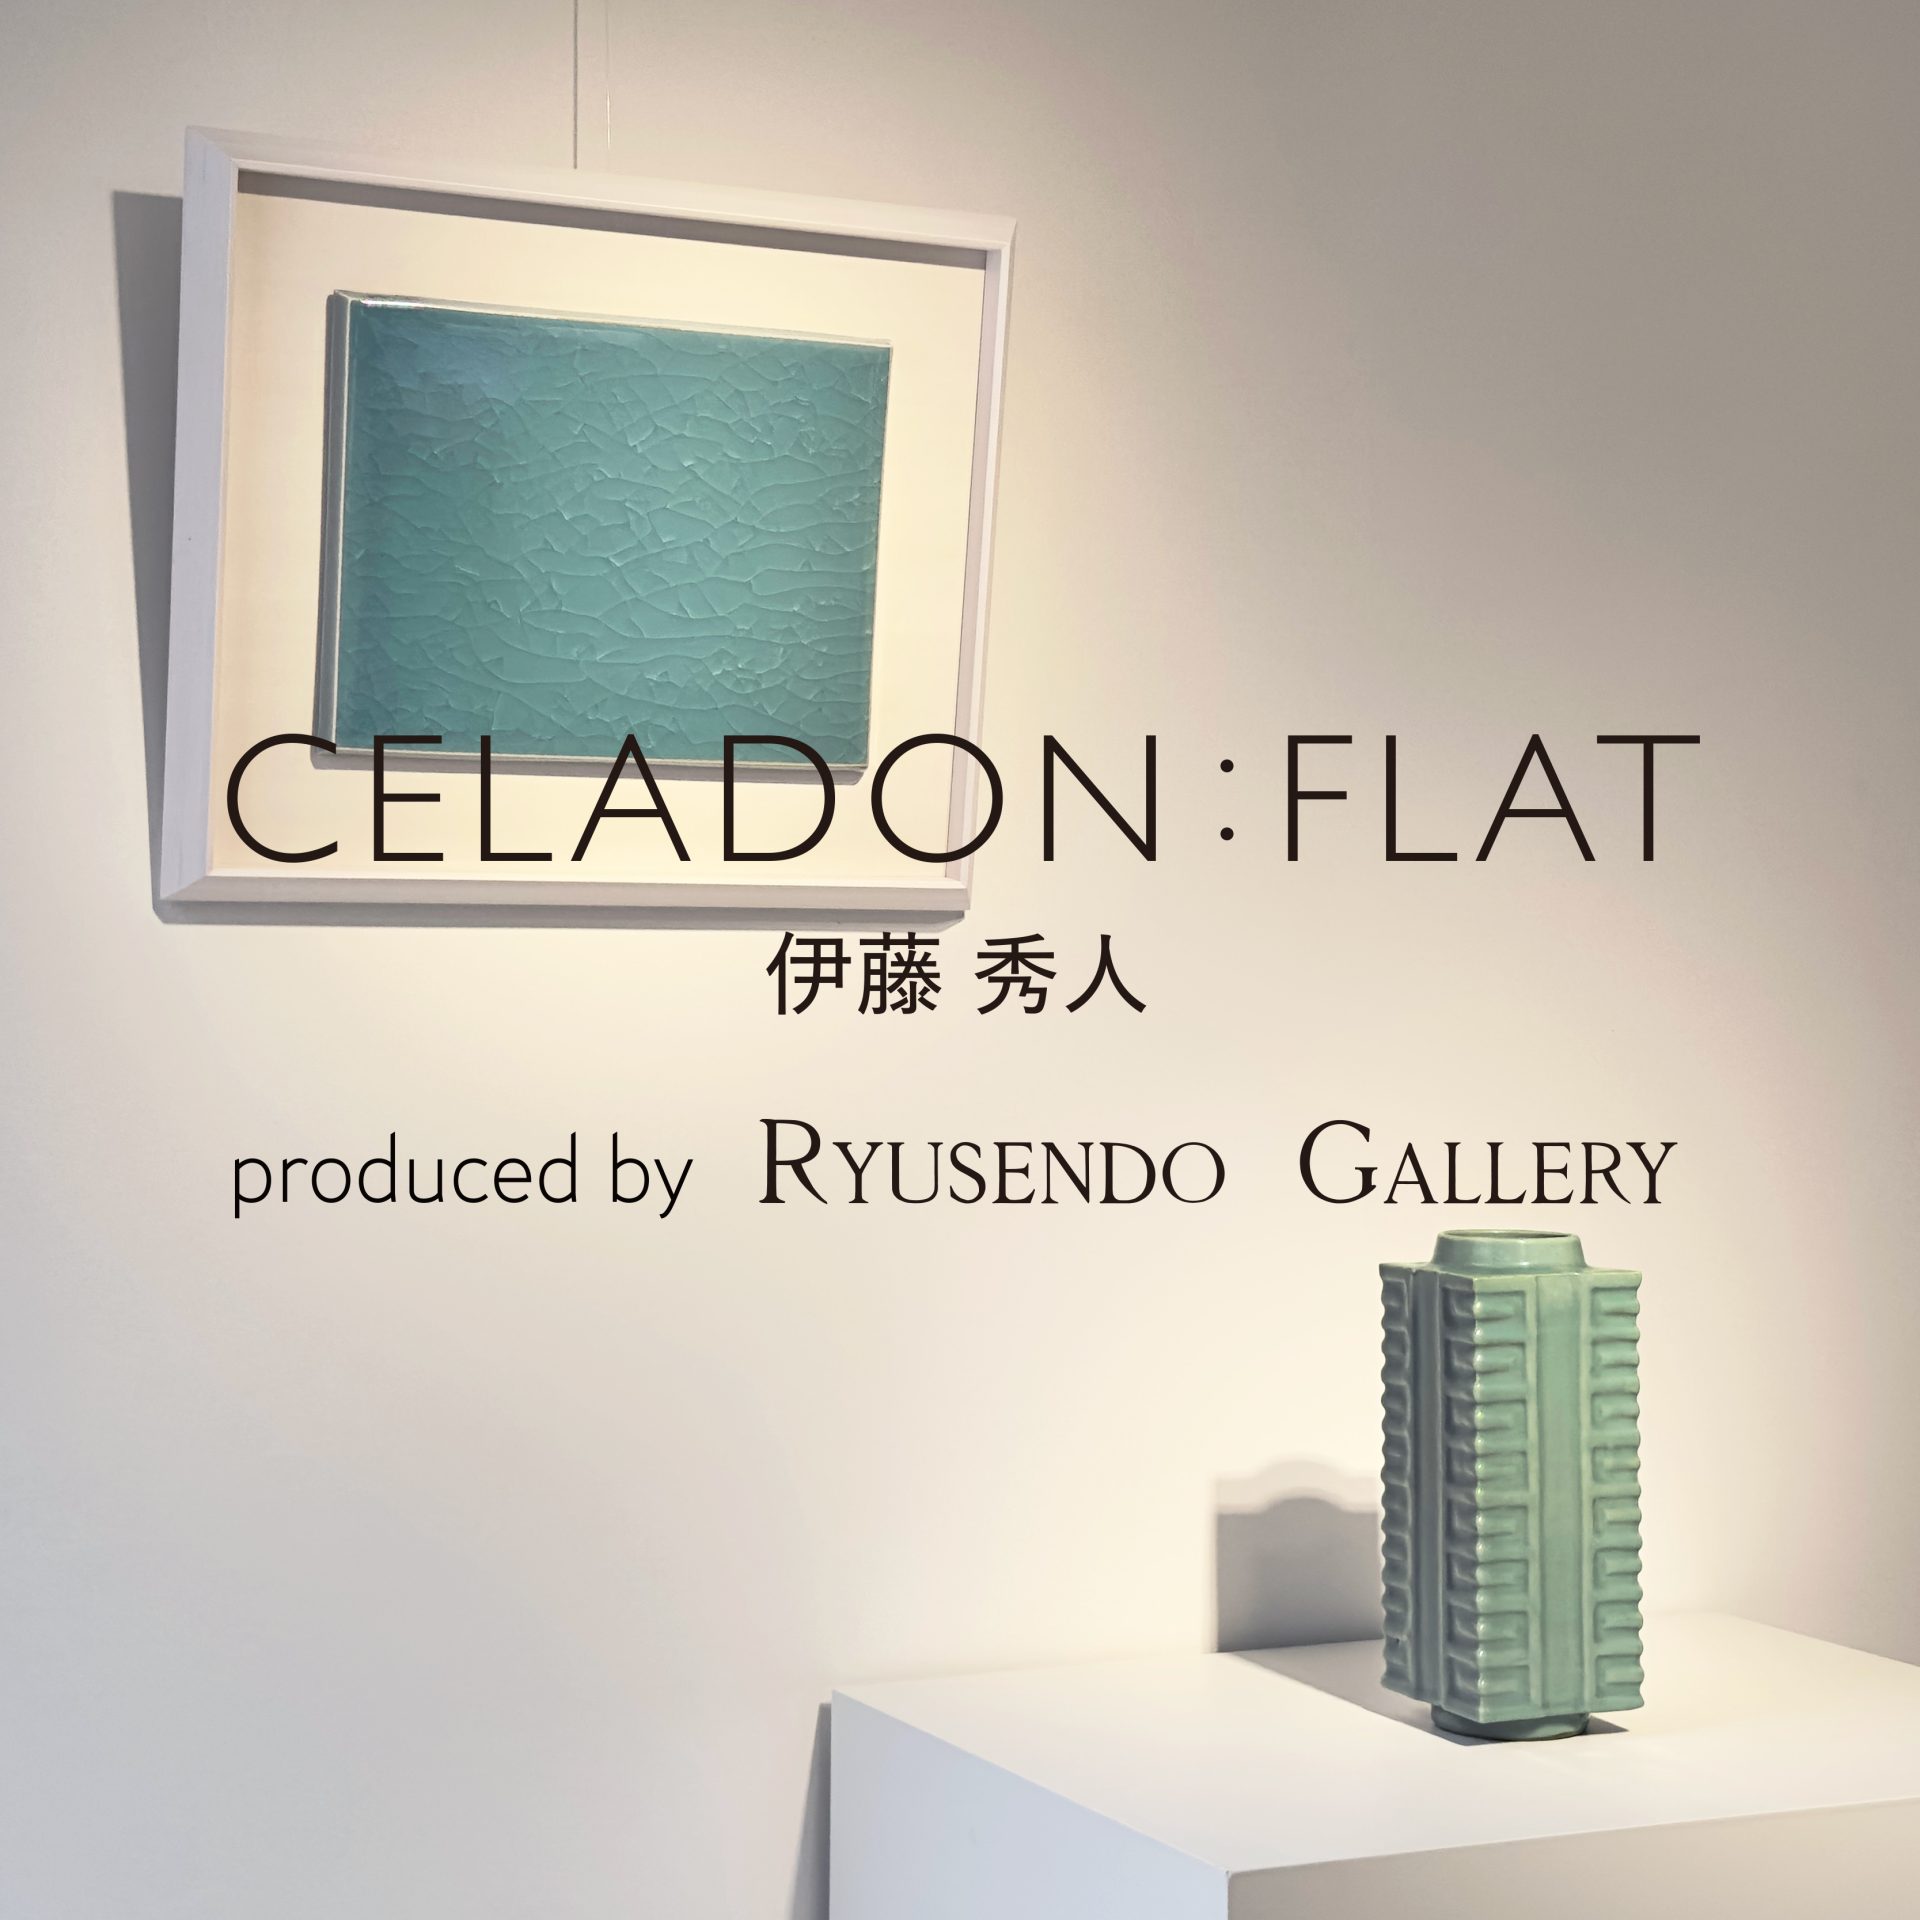 『CELADON:FLAT 伊藤秀人 produced by RYUSENDO GALLERY』